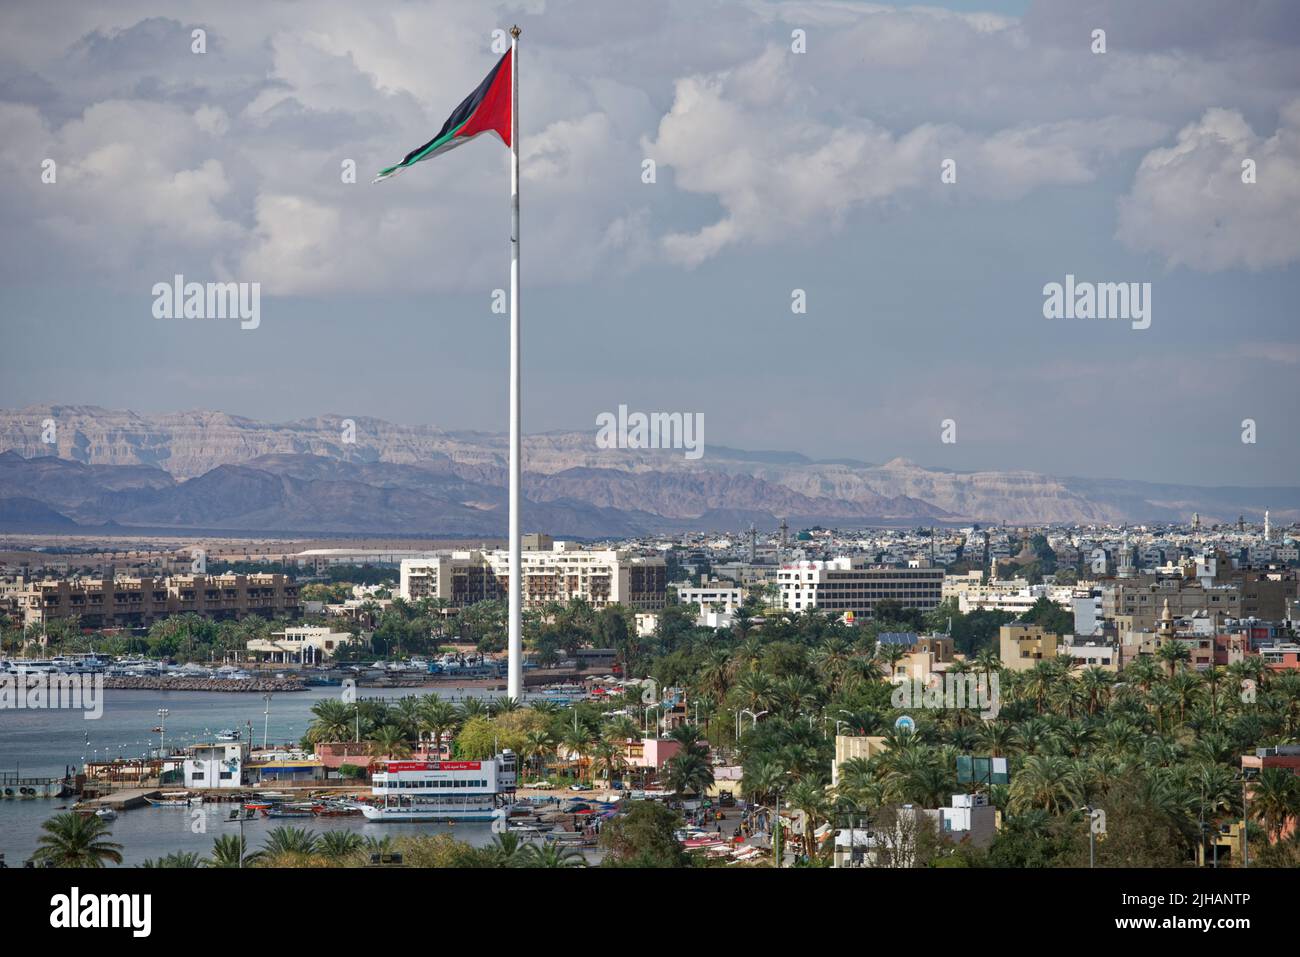 National flag waving over the port of Aquaba, Jordan against a cityscape Stock Photo